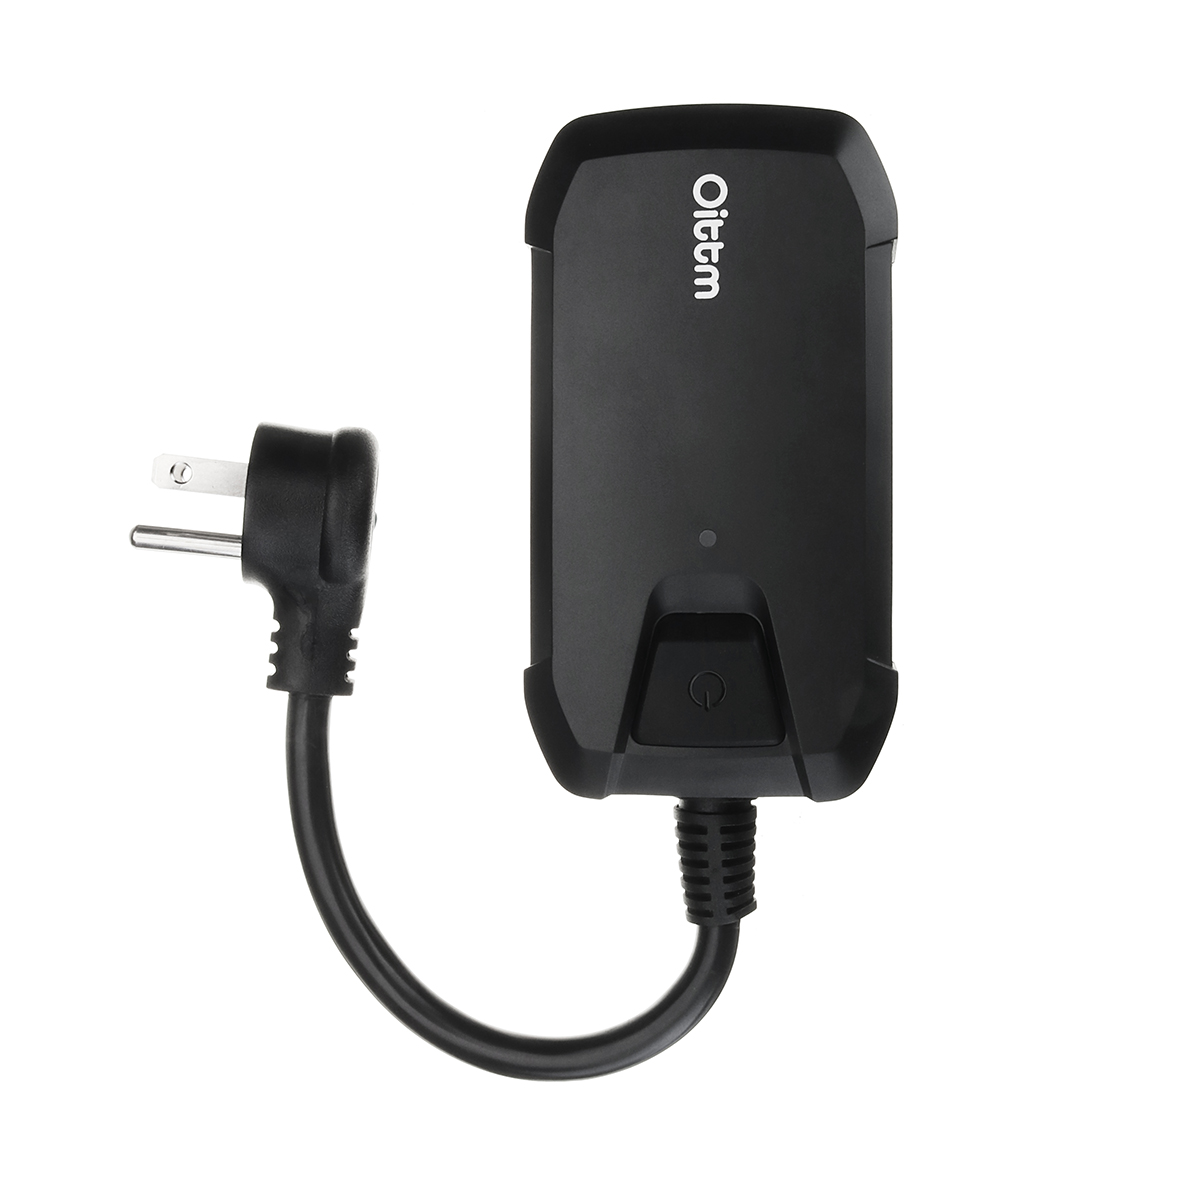 

Oittm Waterproof WIFI Smart Socket Switch Outlet US Plug Works With Alexa/Echo/Google Home